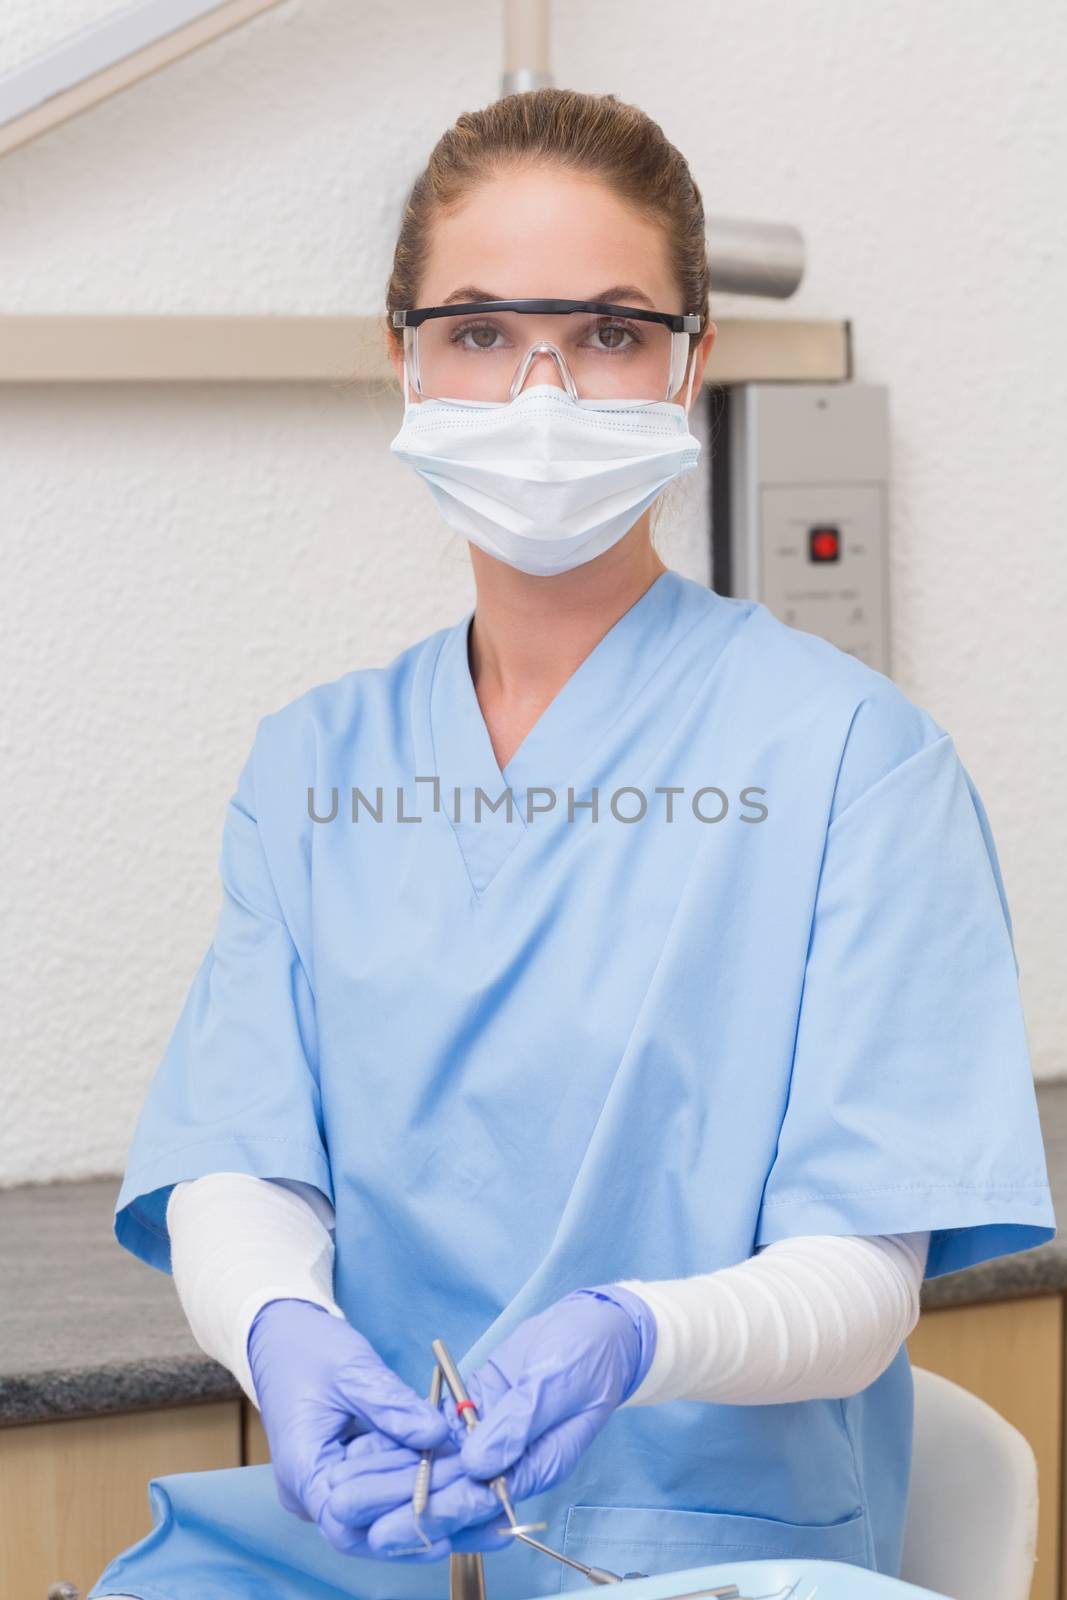 Dentist in blue scrubs holding dental tools by Wavebreakmedia